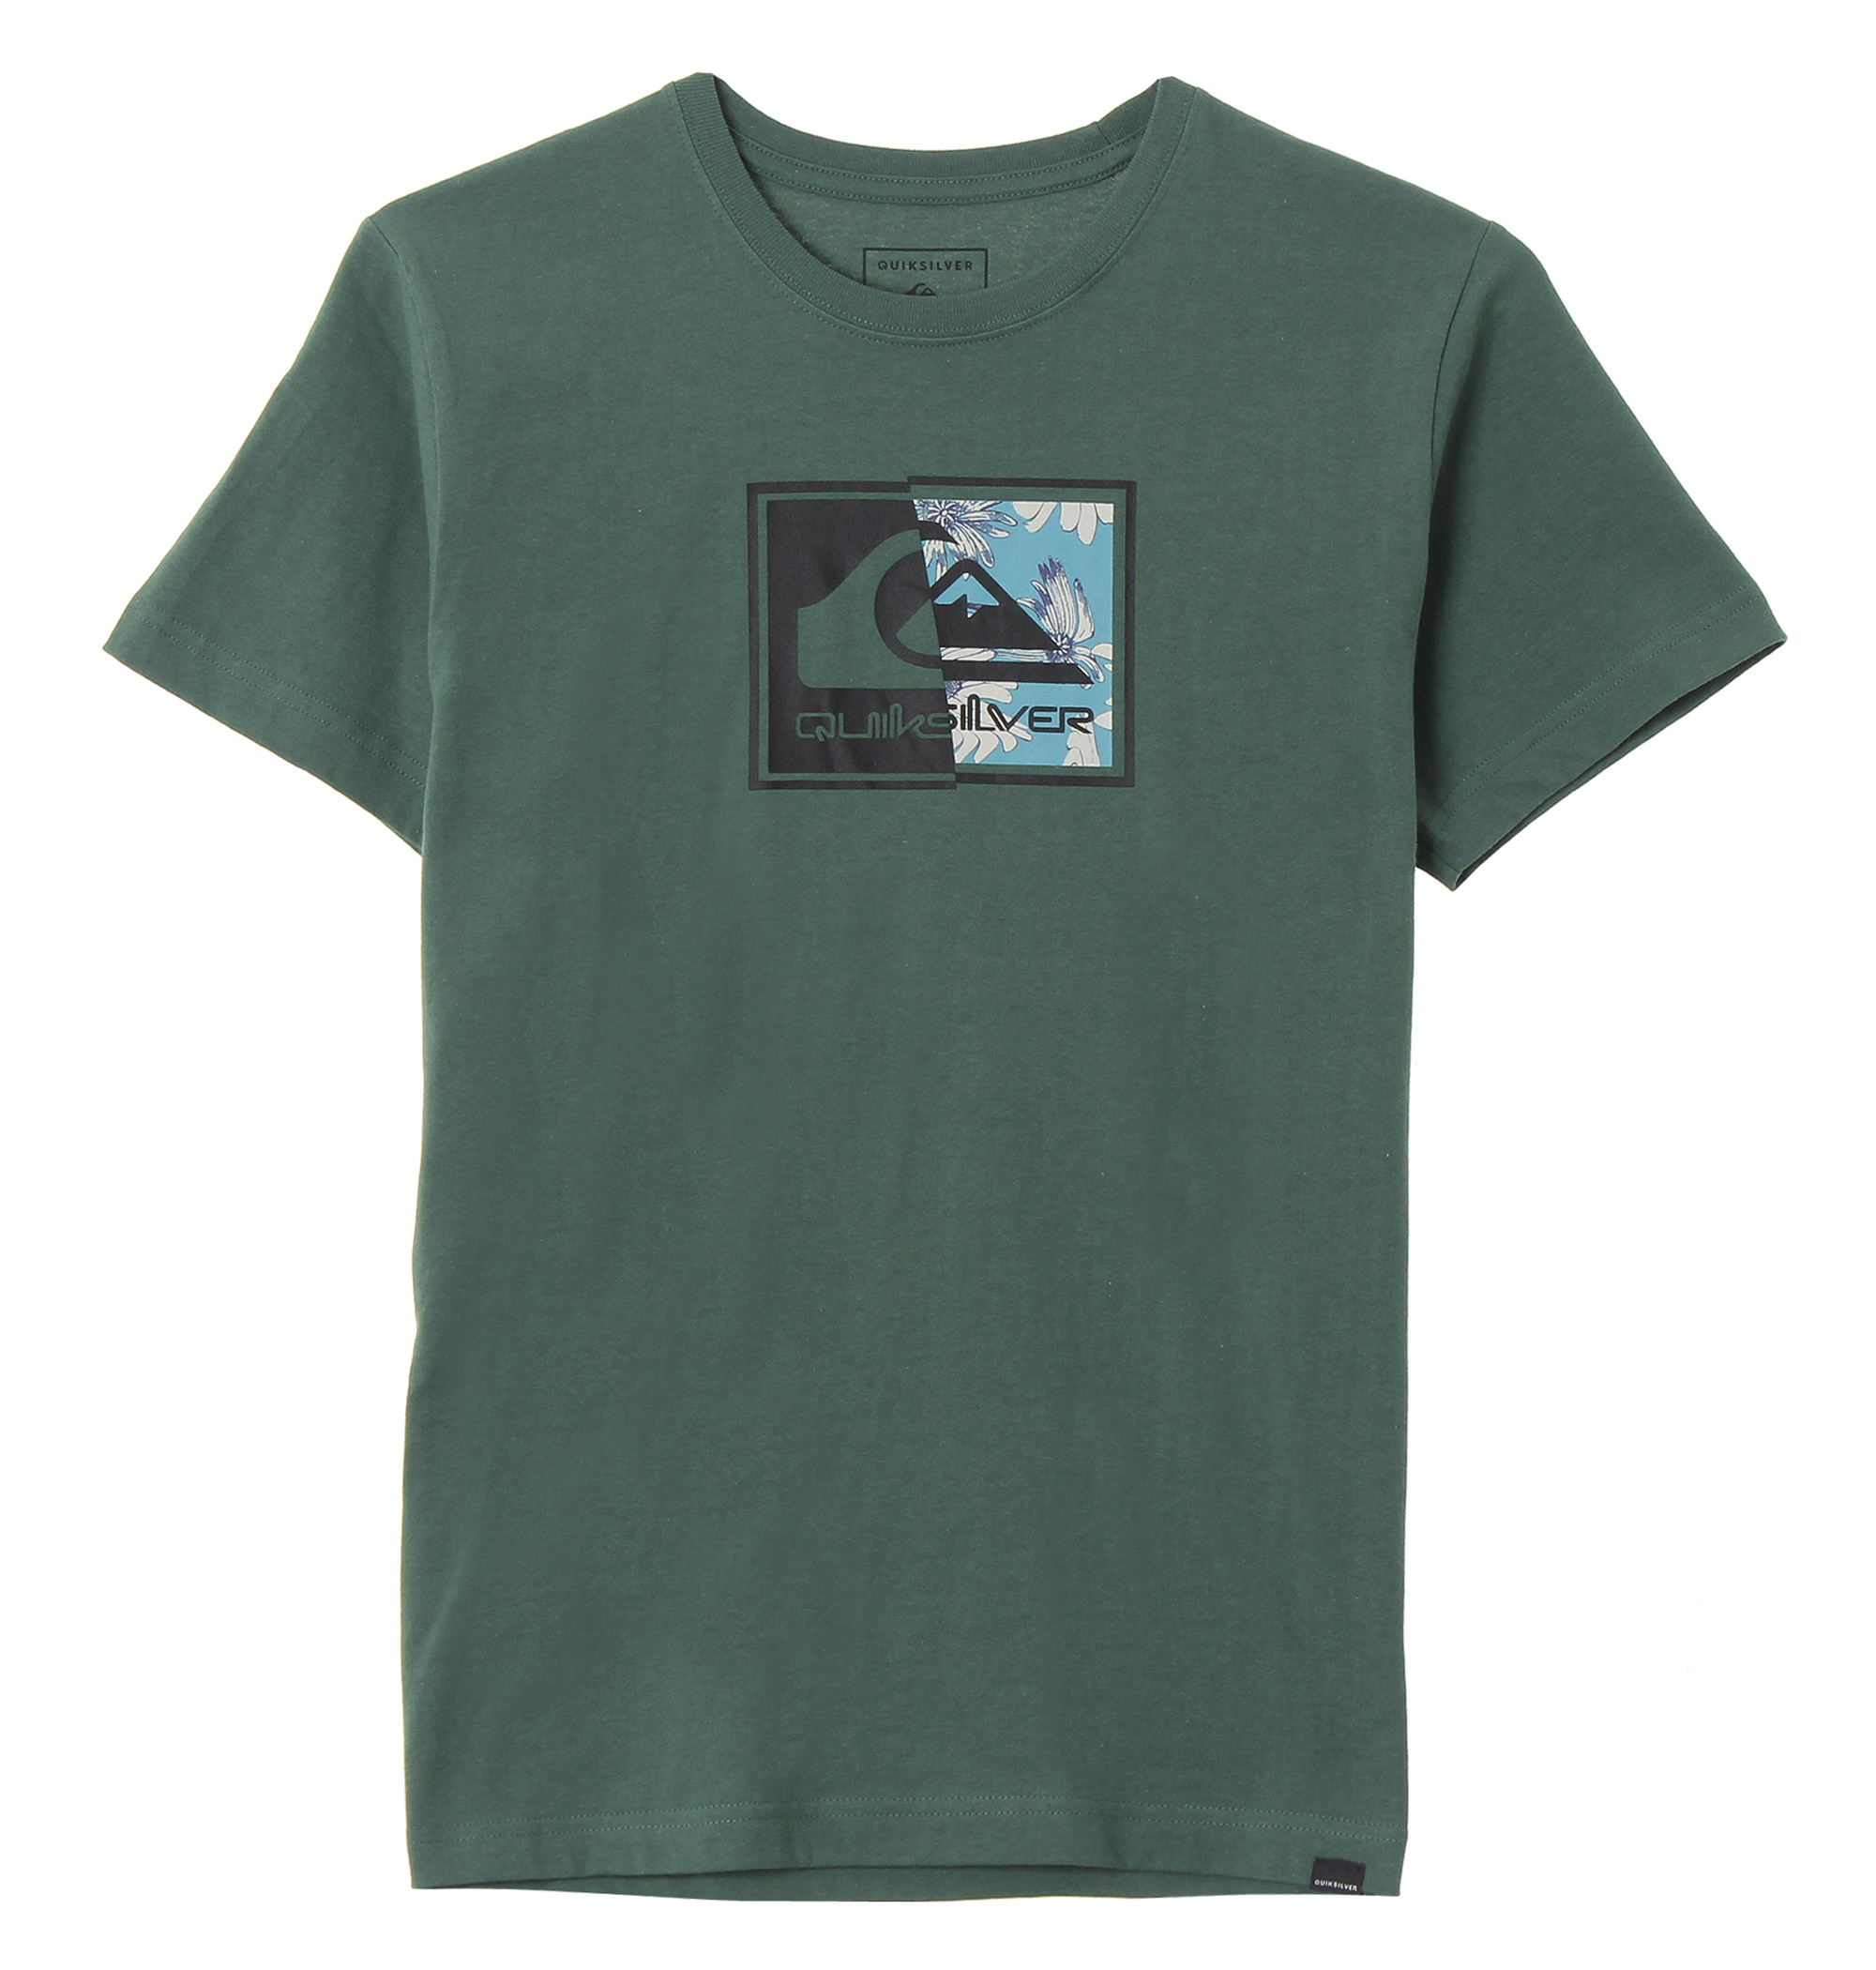 35%OFF！＜Quiksilver＞ FRACTAL LOGO ST バイカラー×ボタニカル柄のブランドアイコンを組み合わせた斬新なデザインに視線が集まる半袖Tシャツ